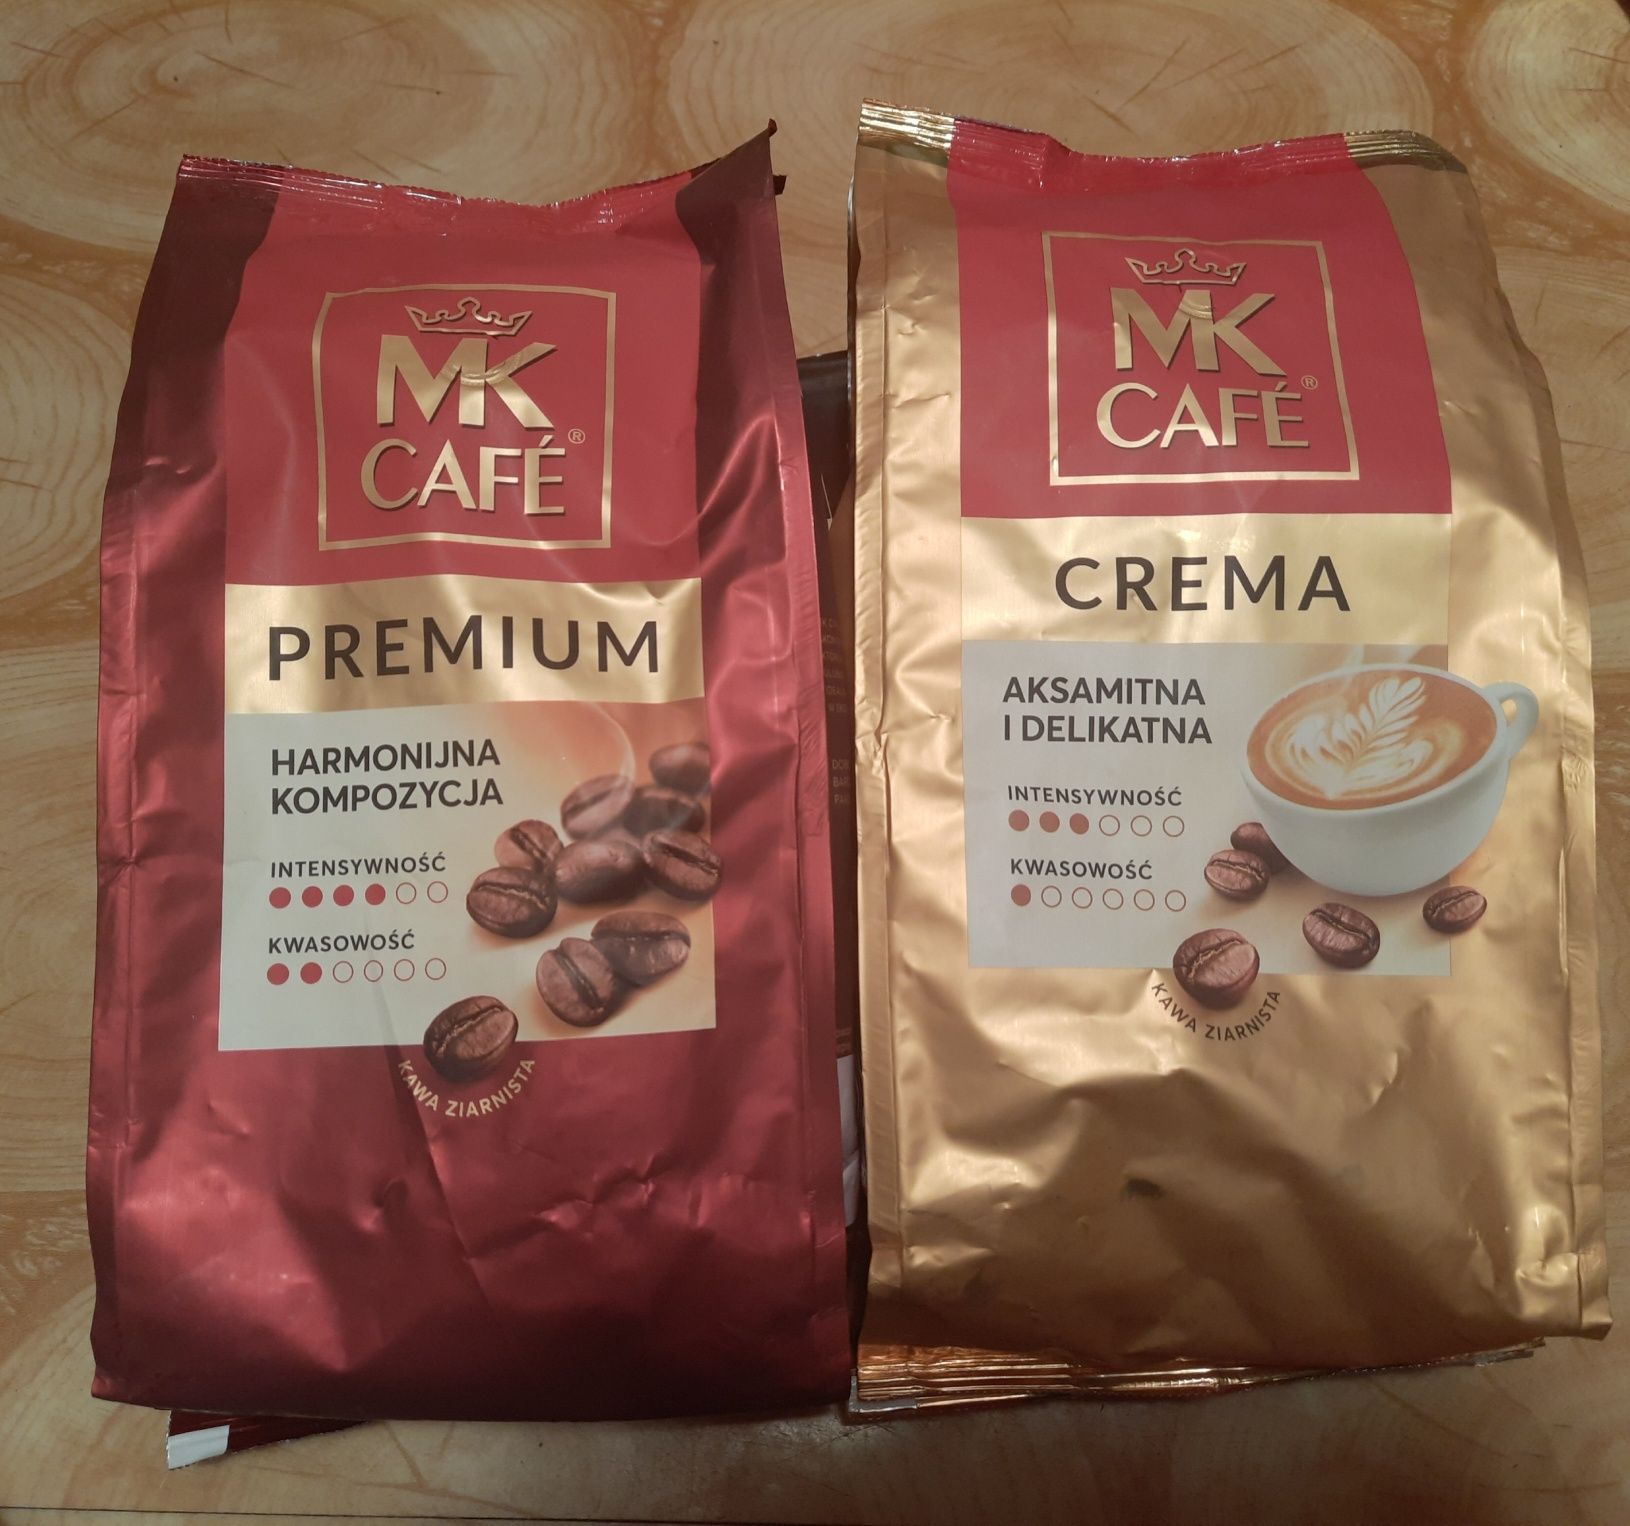 2kg kawy ziarnistej: 1kgMkCafe Crema+1kg McCafe Premium